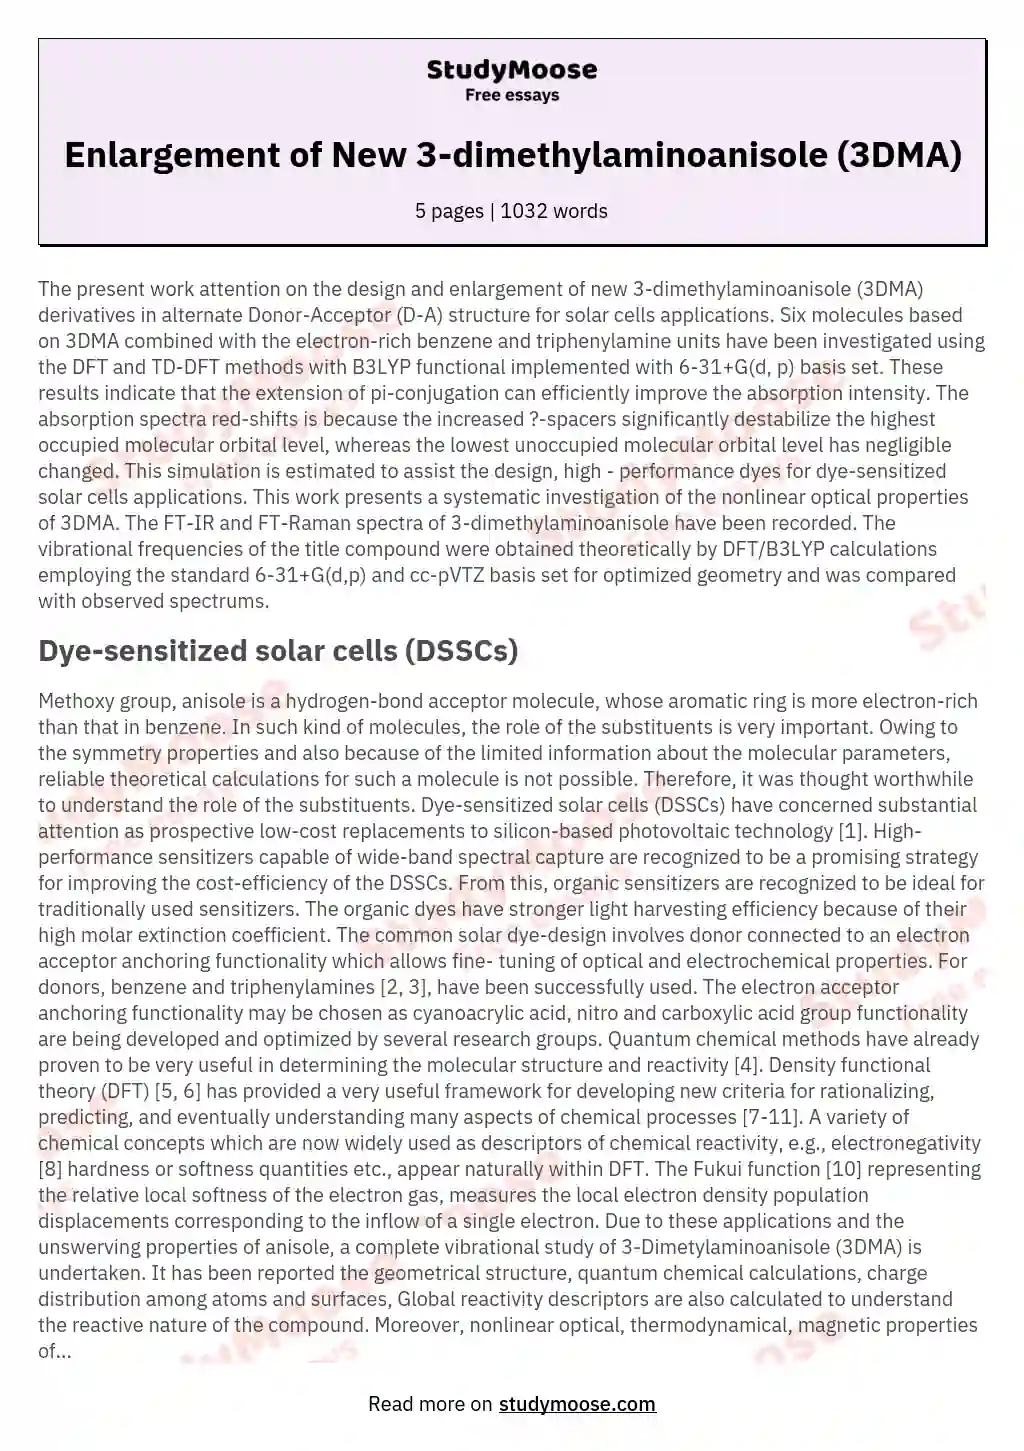 Enlargement of New 3-dimethylaminoanisole (3DMA) essay